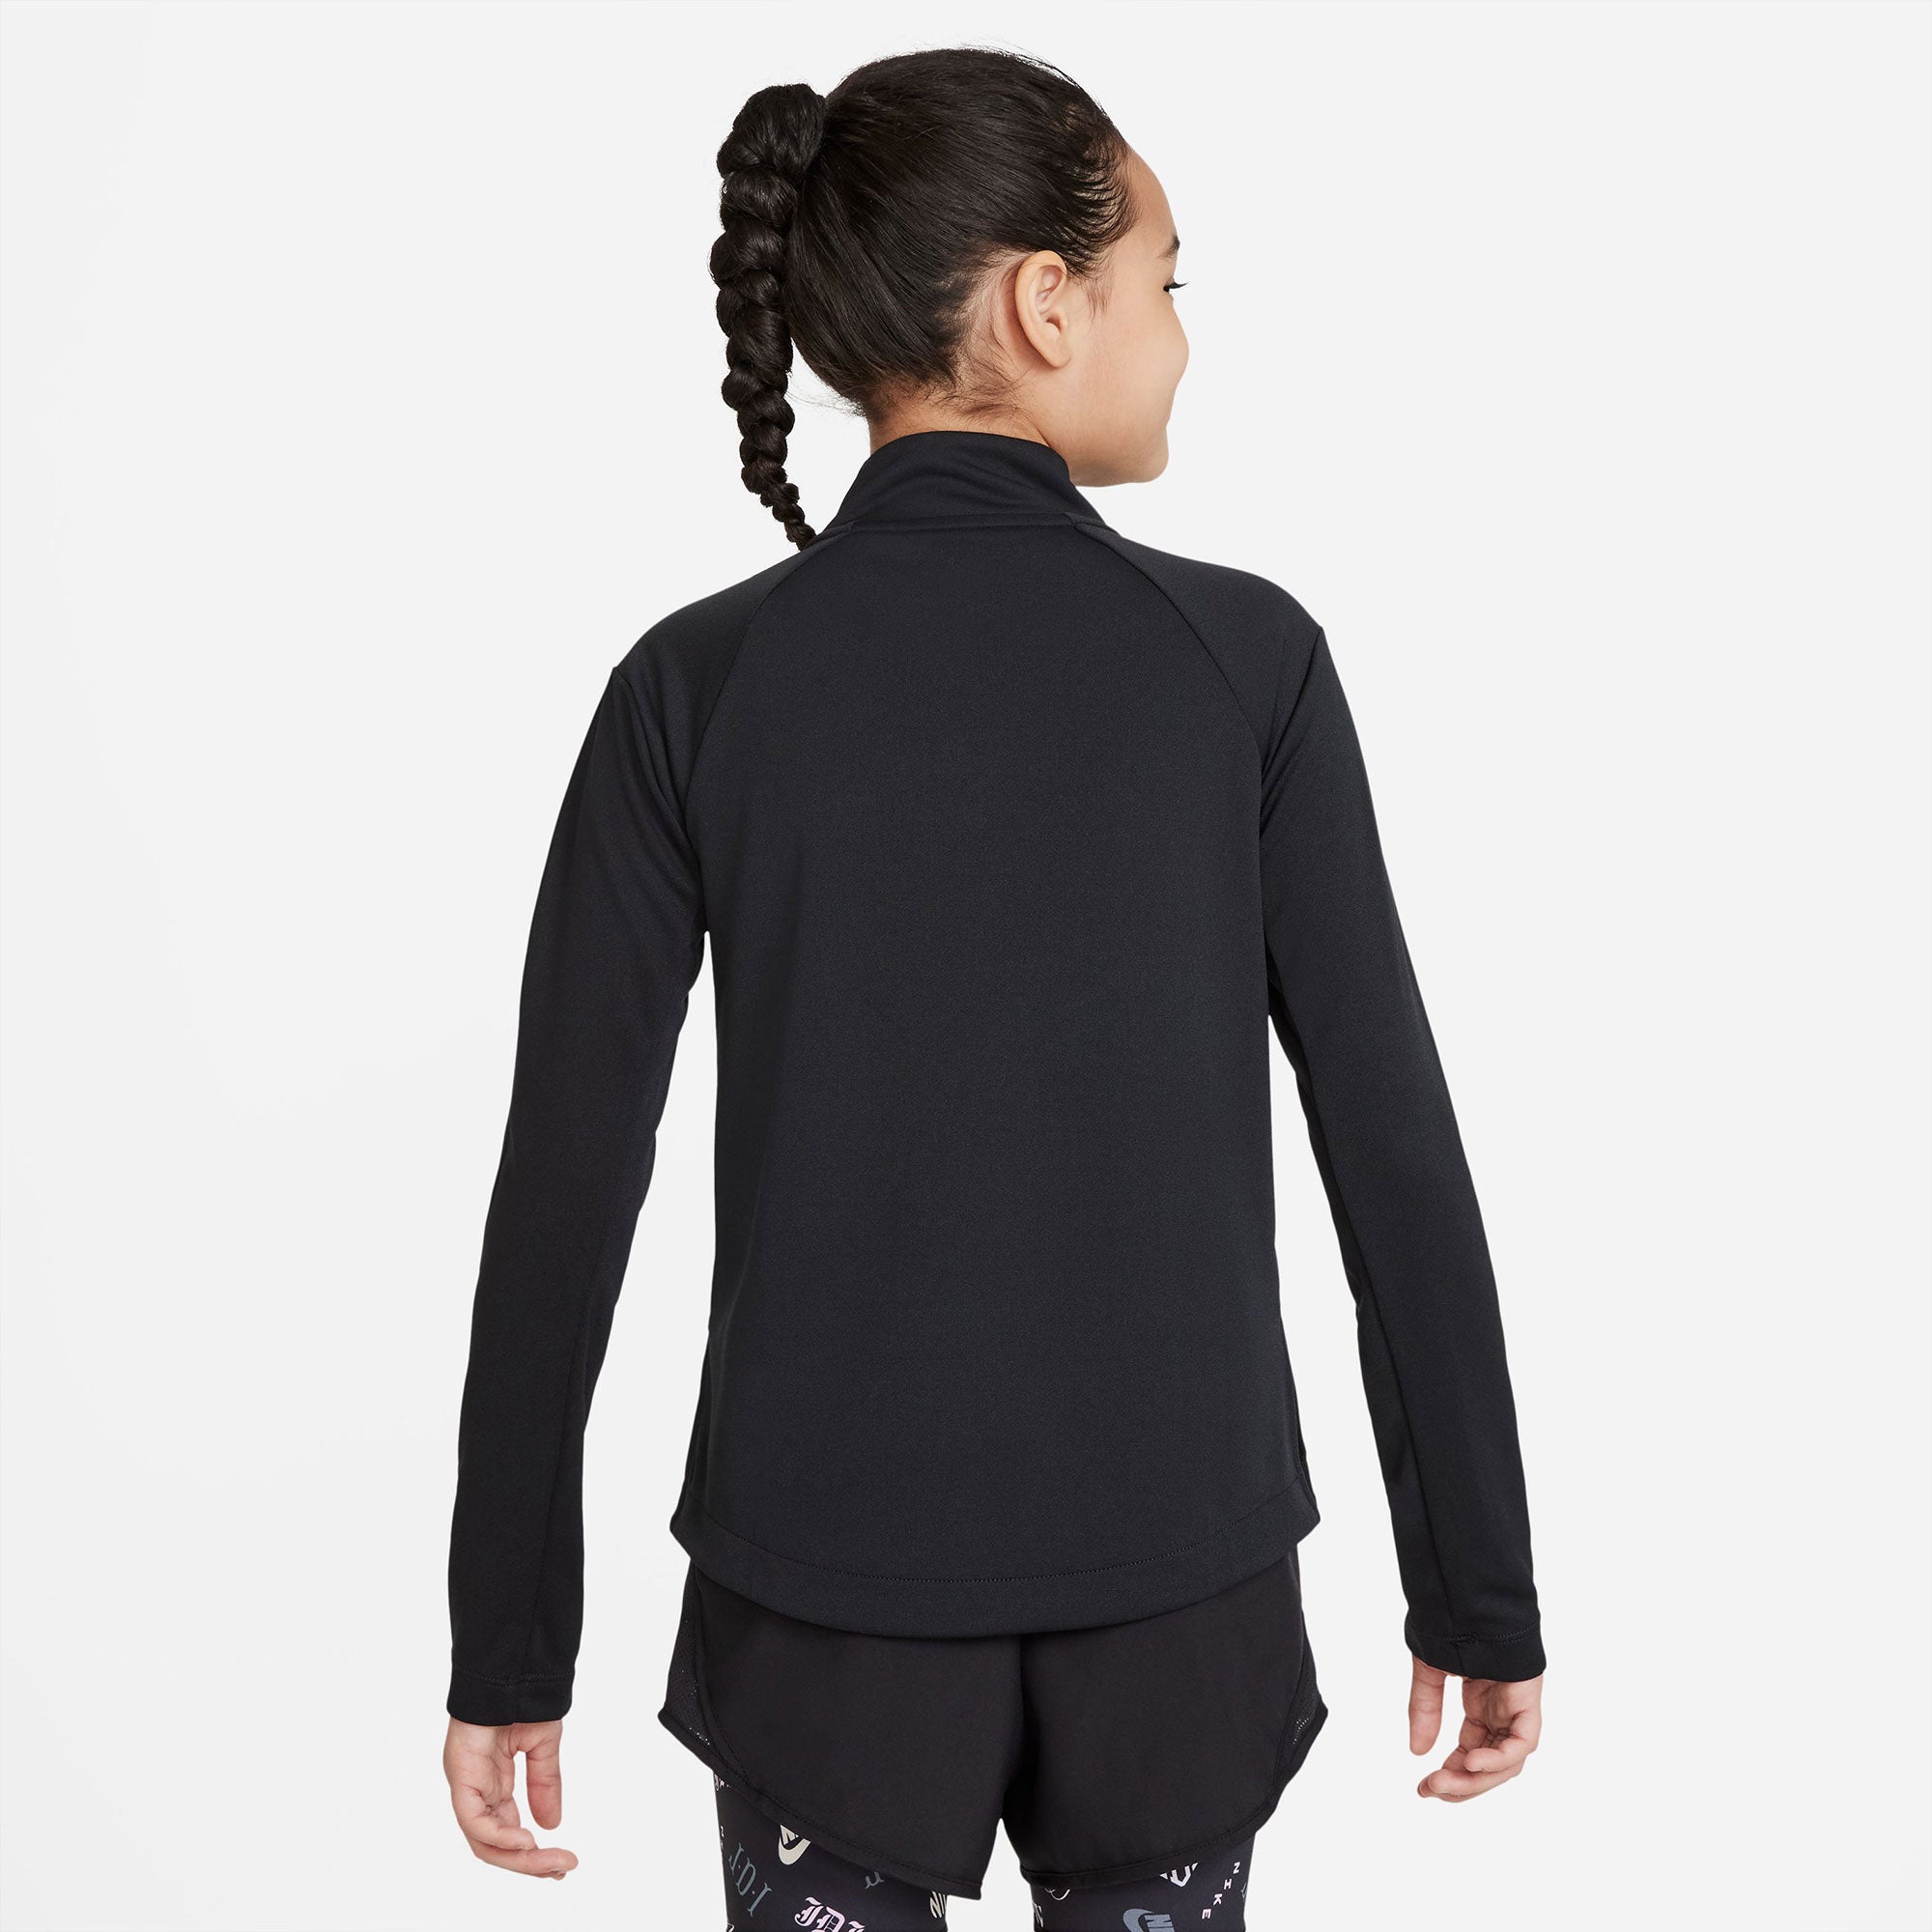 Nike Dri-FIT Girls' Long-Sleeve Top Black (2)